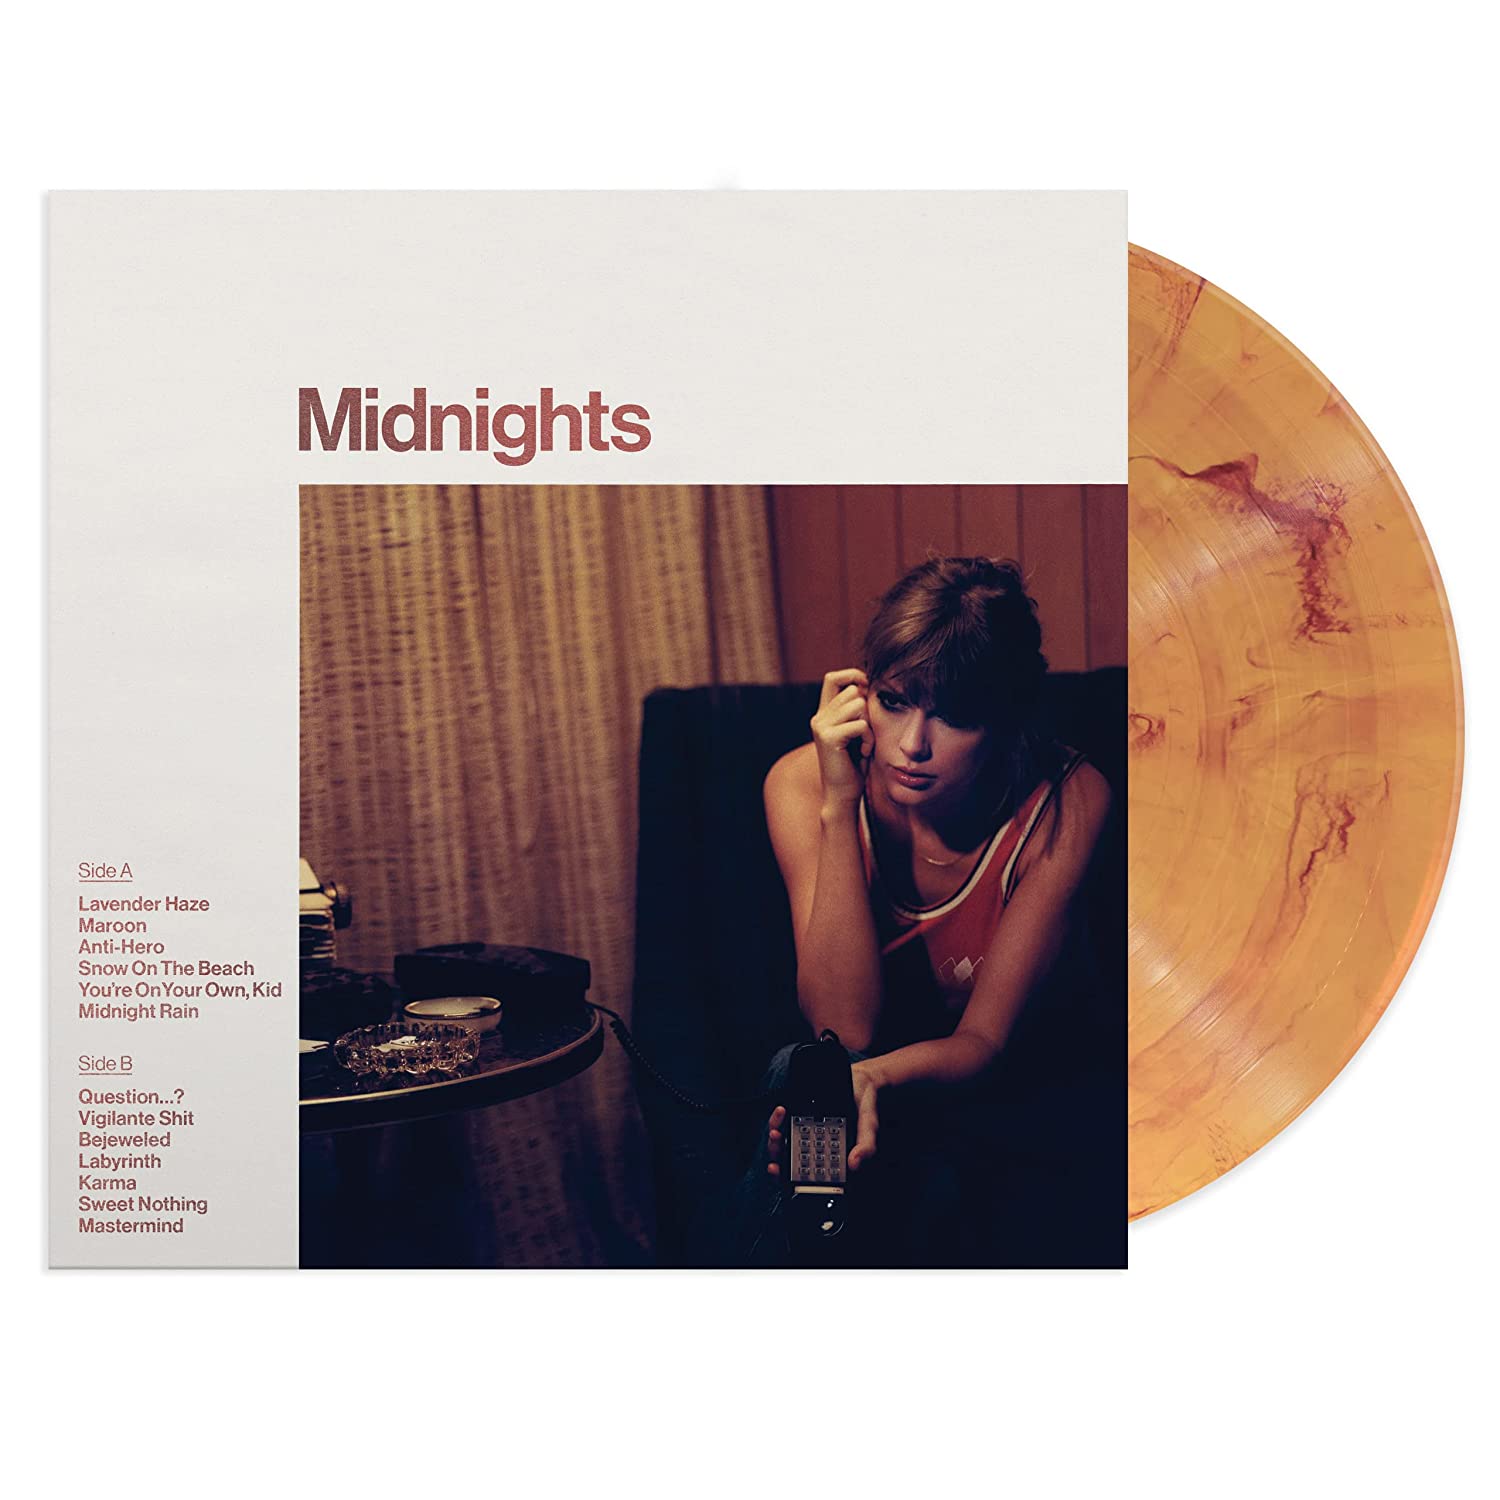 Taylor Swift 'Midnights' (Blood Moon Edition) Vinyl Record LP - Sentinel Vinyl